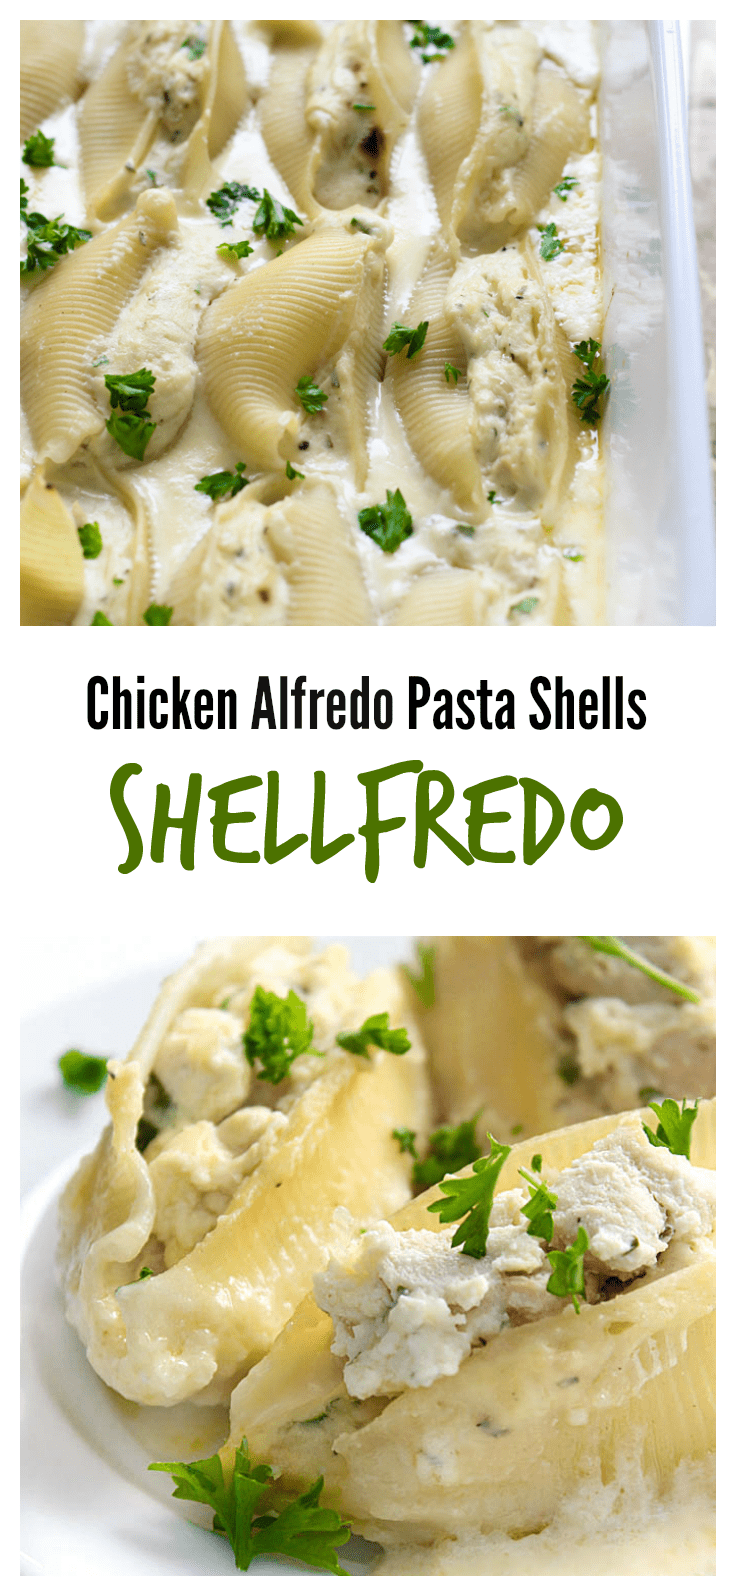 Chicken Alfredo pasta shells are decadent and delicious. These shellfredos have ricotta chicken stuffed shells swimming in a rich Alfredo sauce.